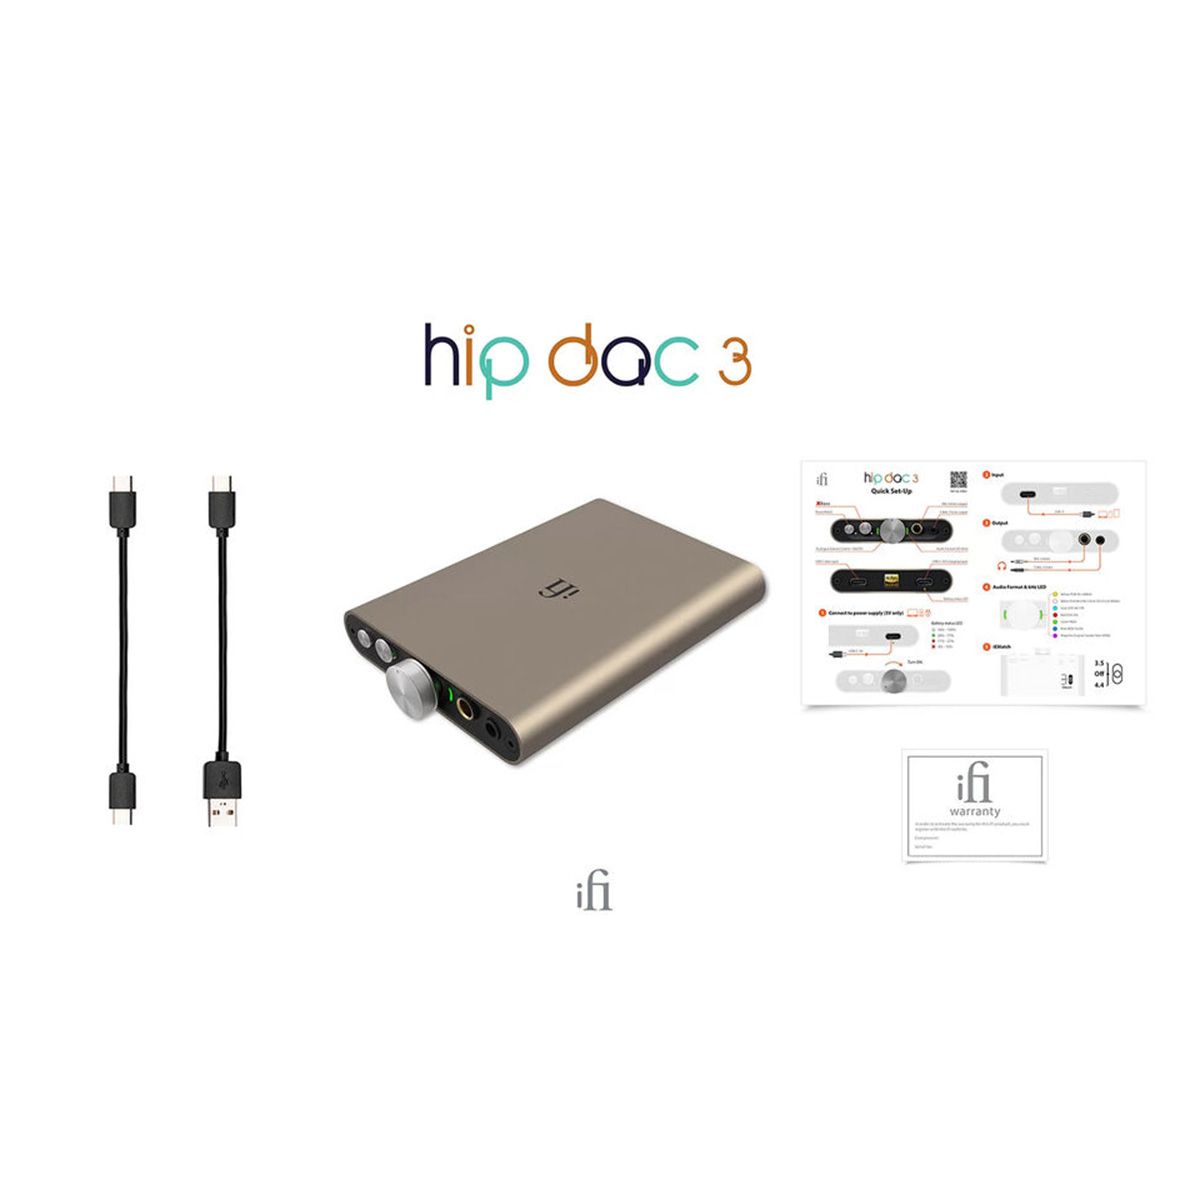 iFi Audio hip-dac 3 Portable USB DAC and Headphone Amplifier - box contains image